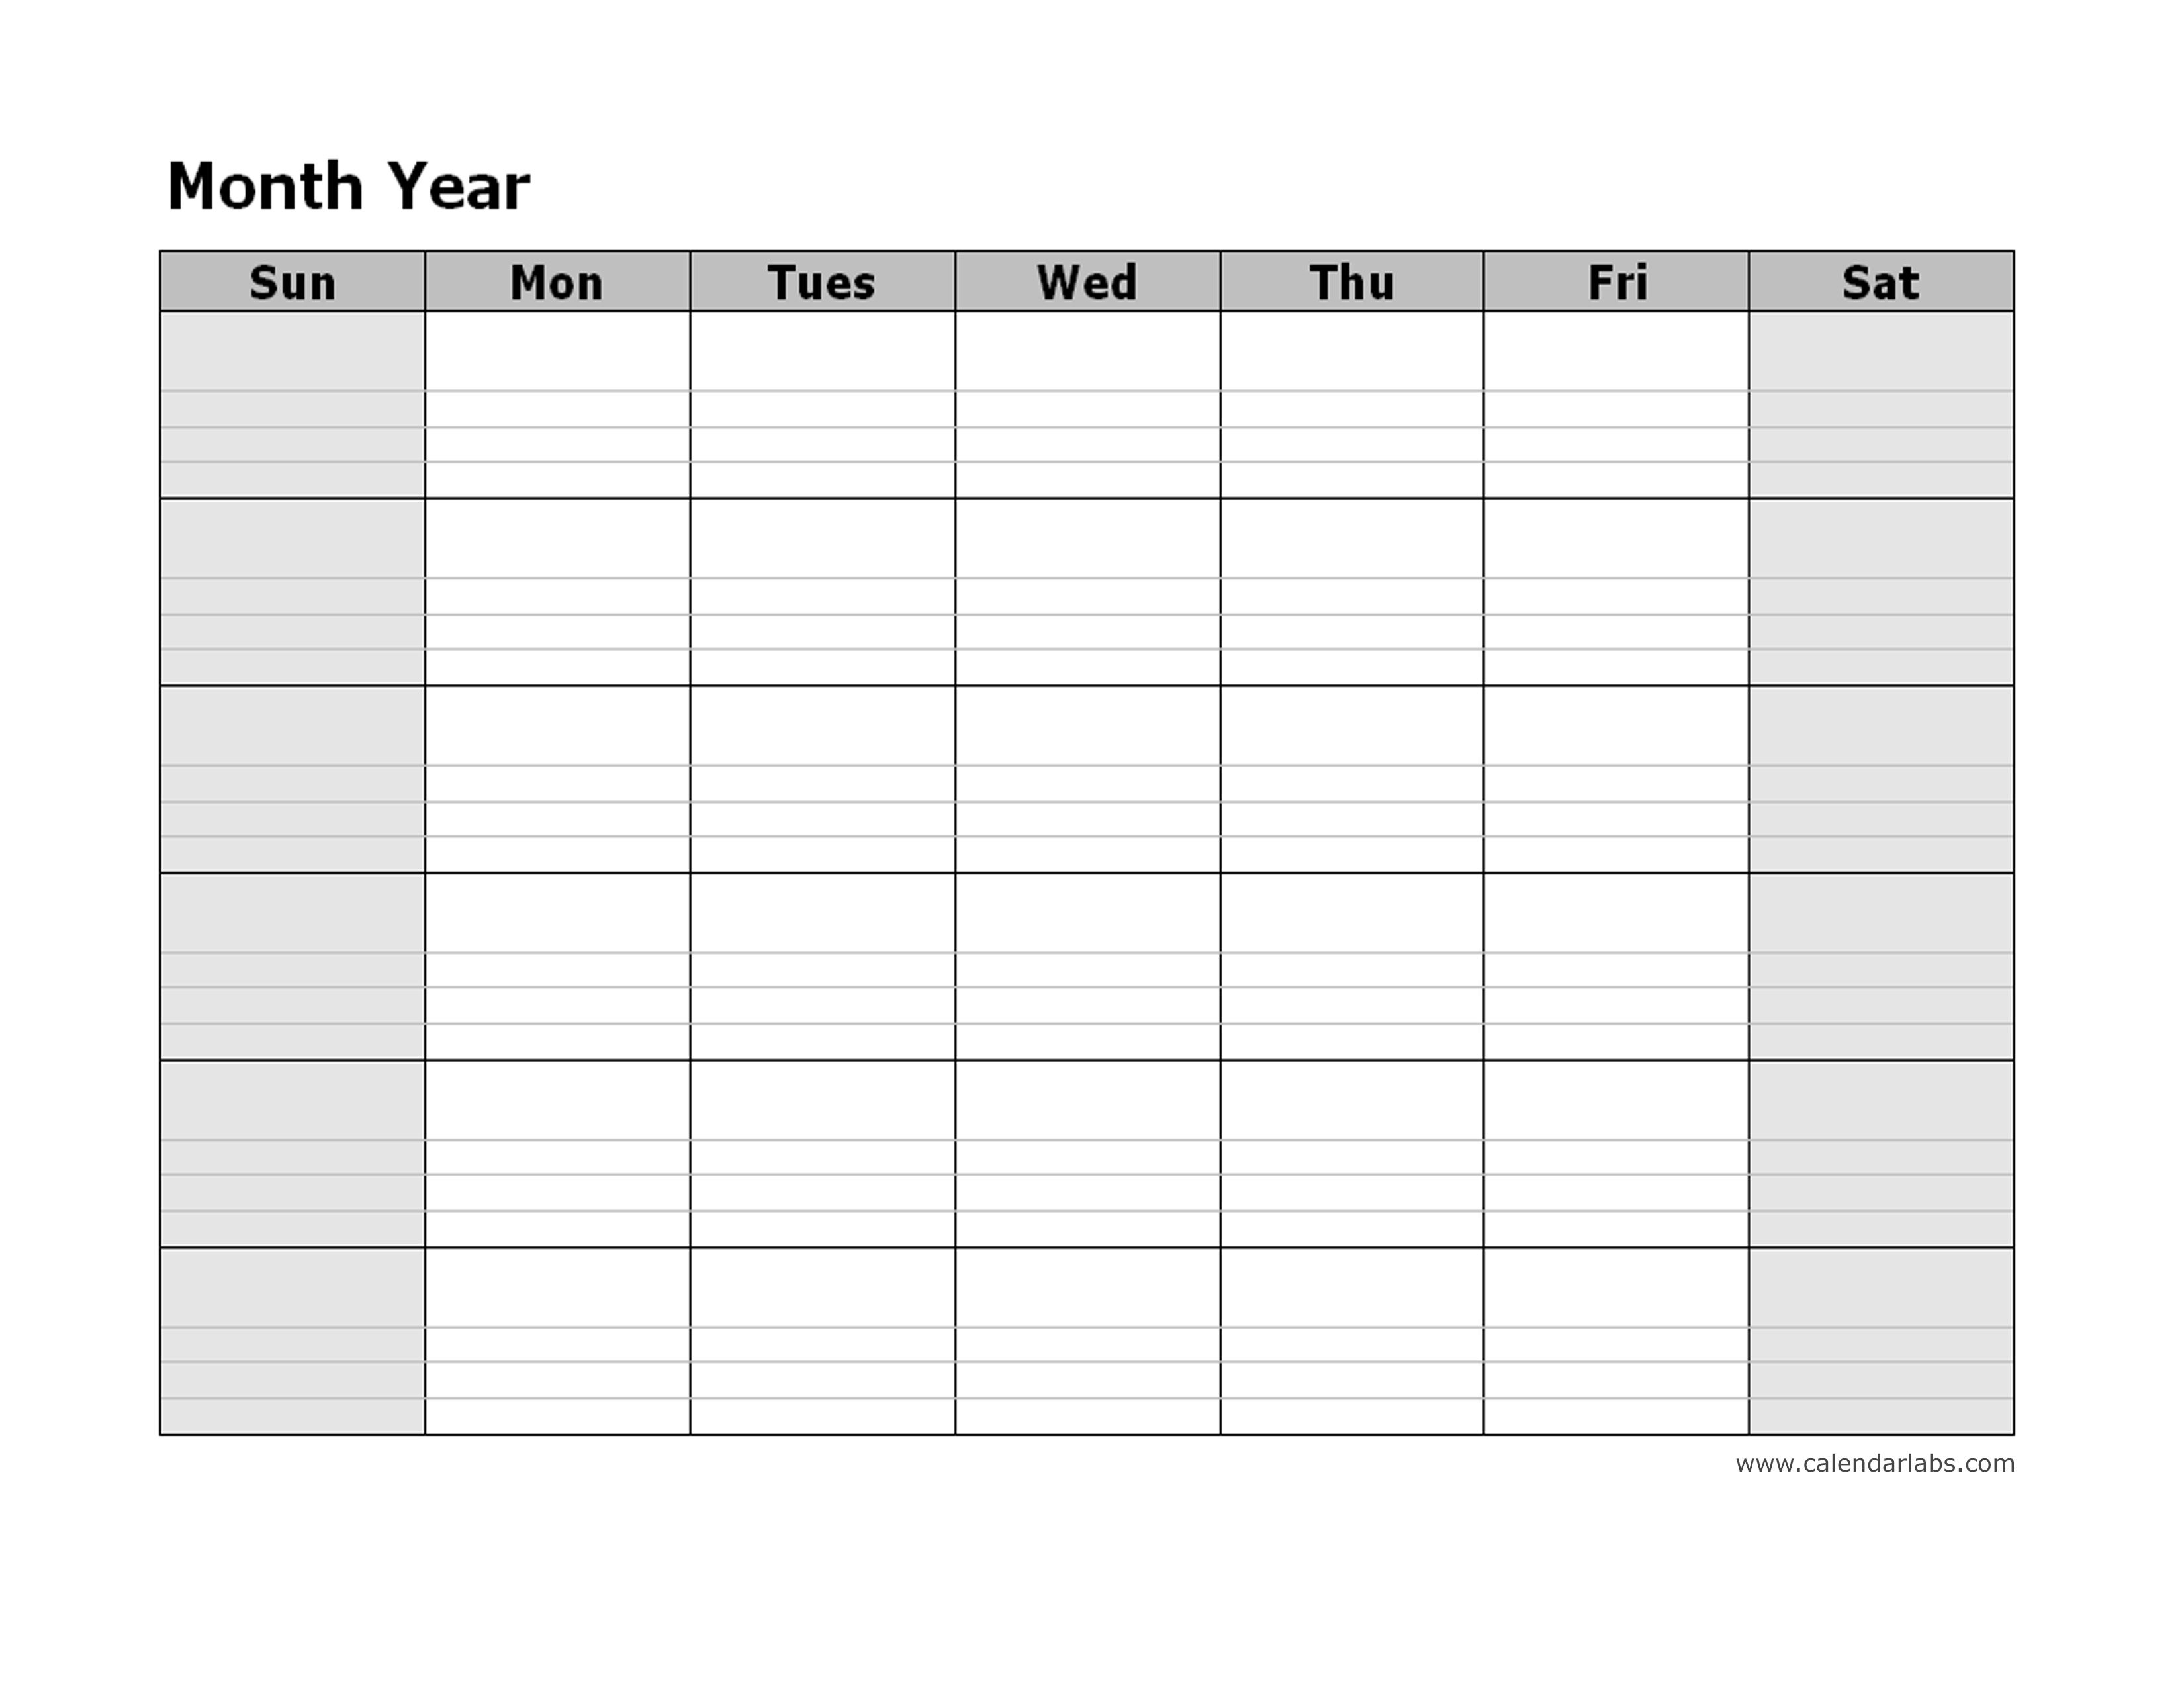 Monthly Calendar Printable Template - prntbl.concejomunicipaldechinu.gov.co